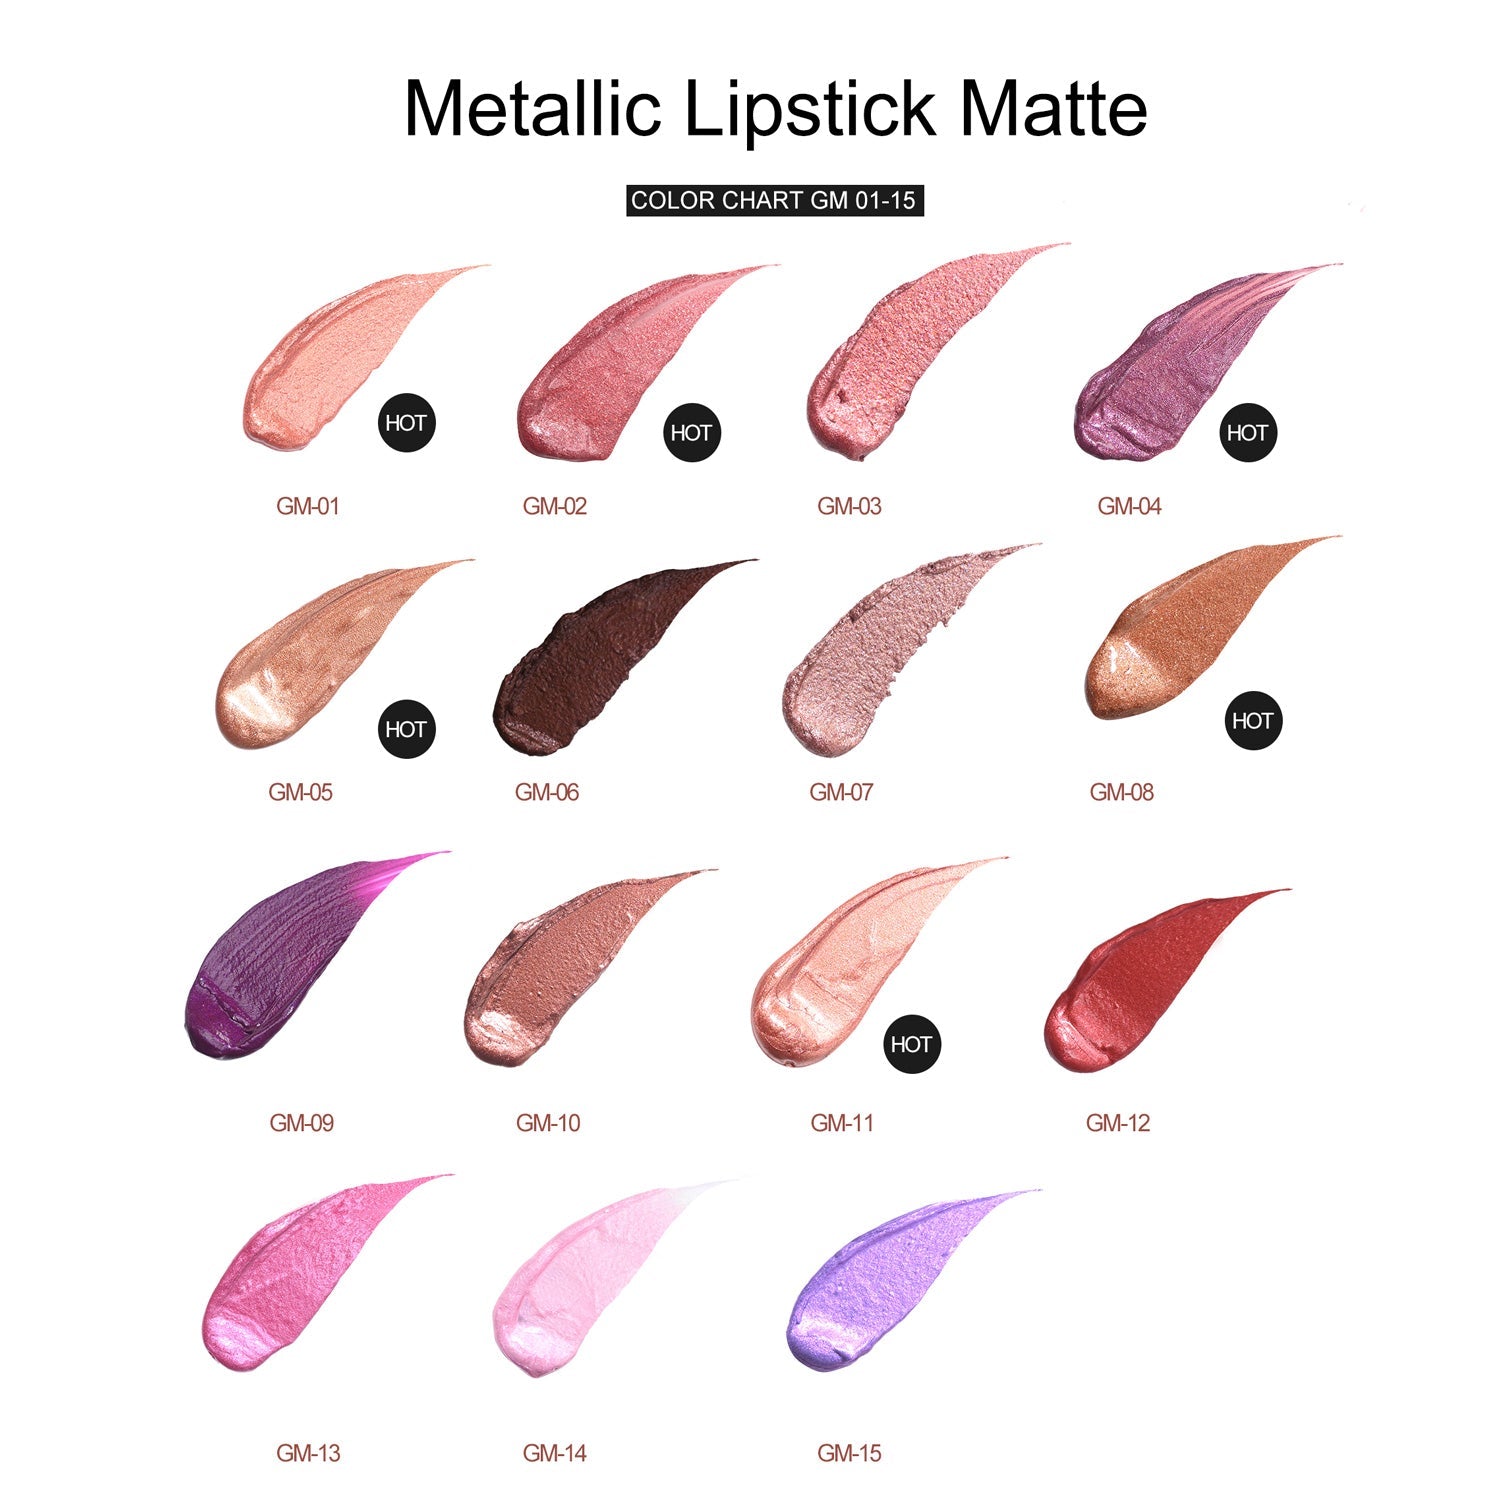 Metallic Lipstick Matte